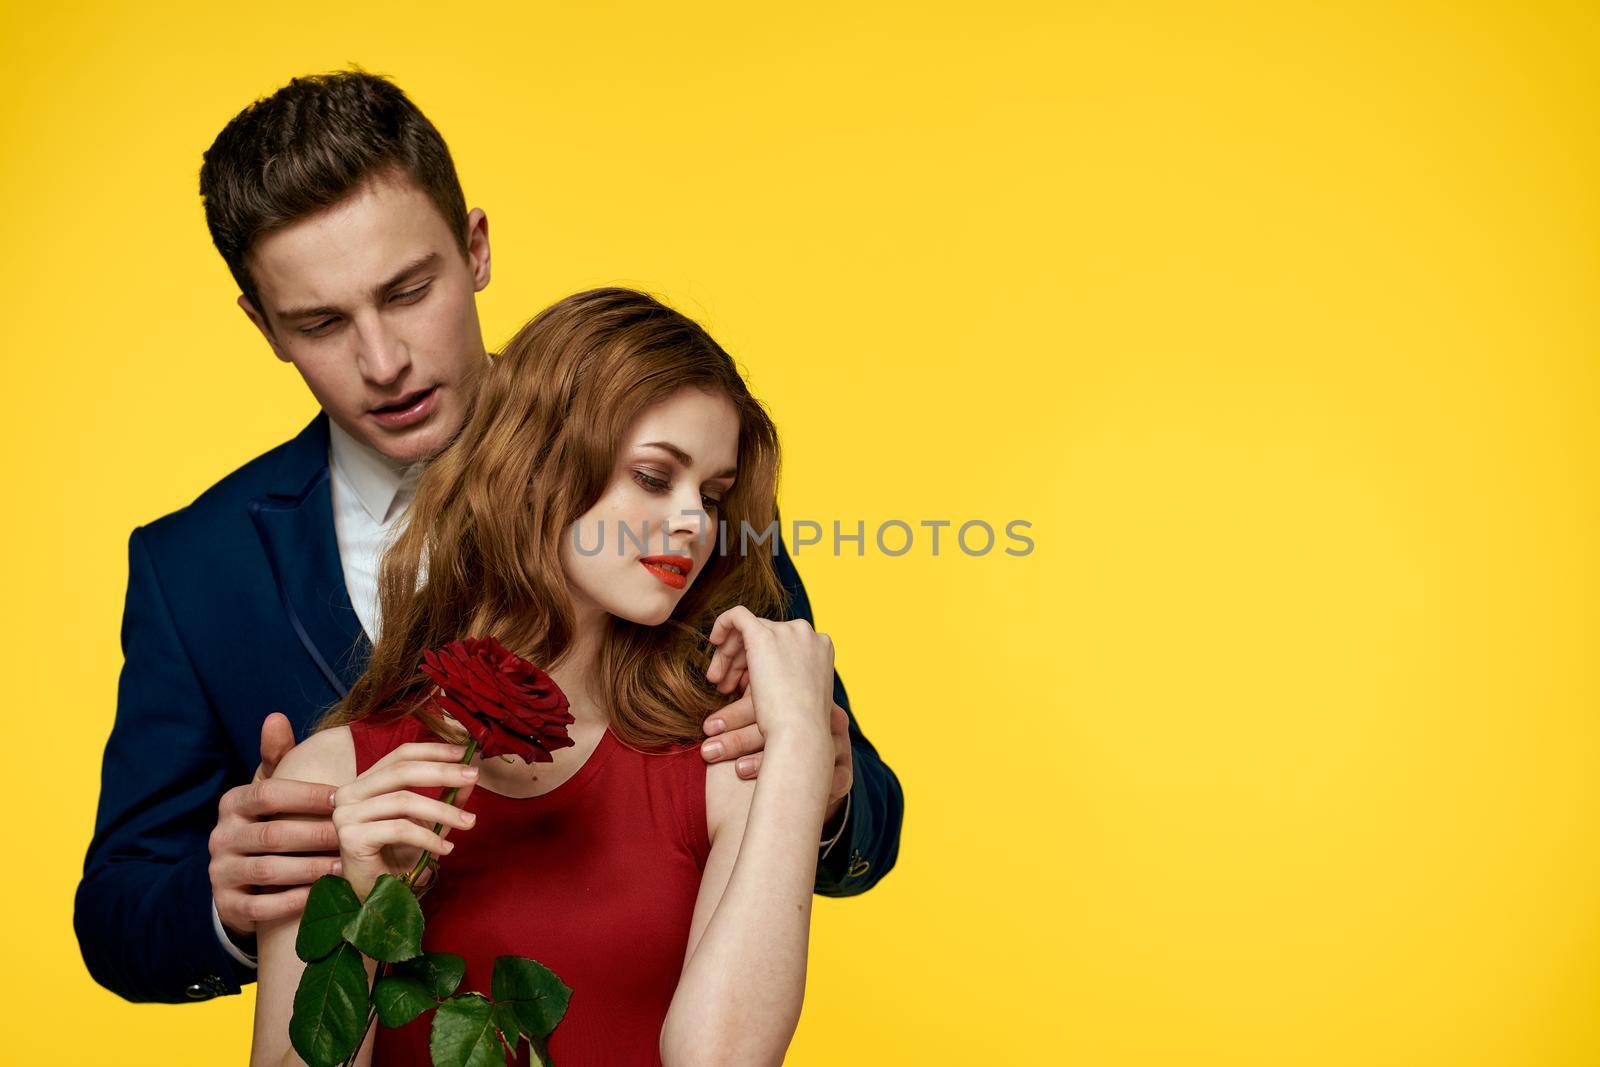 Cute couple dating hug romance yellow background. High quality photo